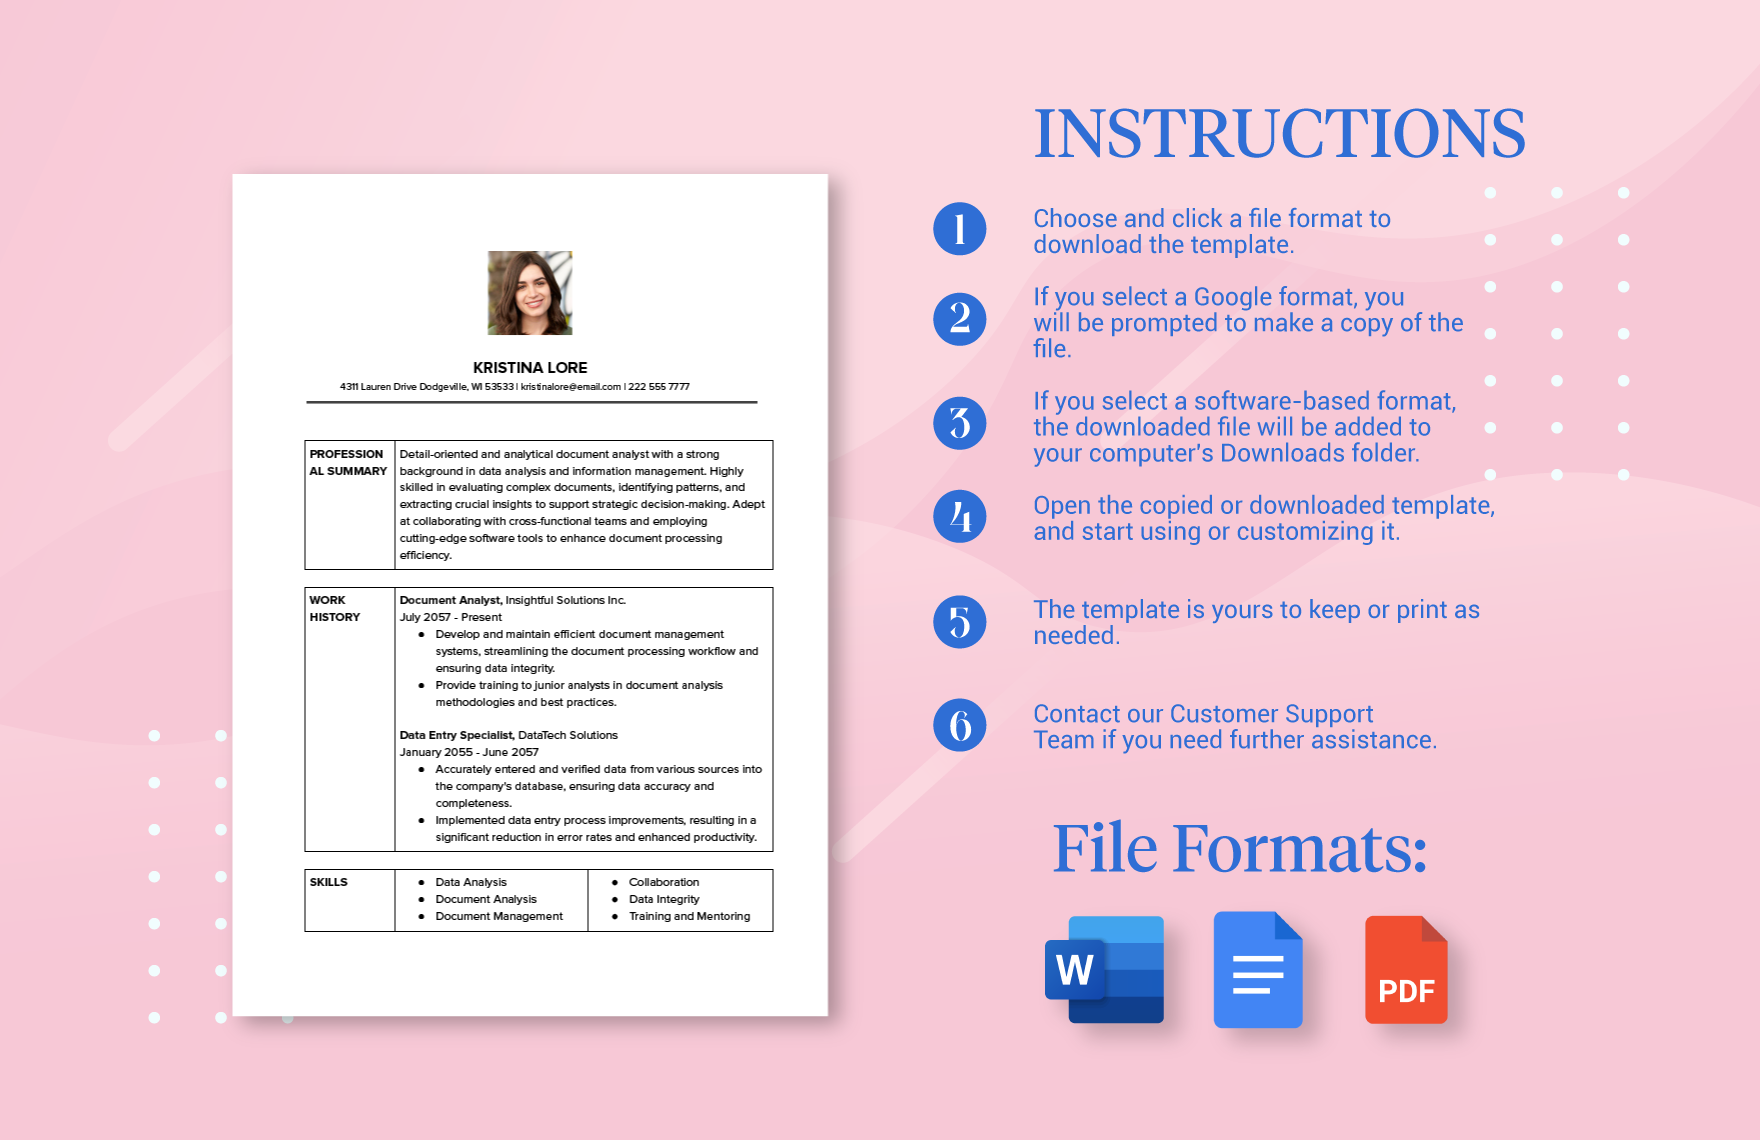 Sample Document Analyst Resume Template